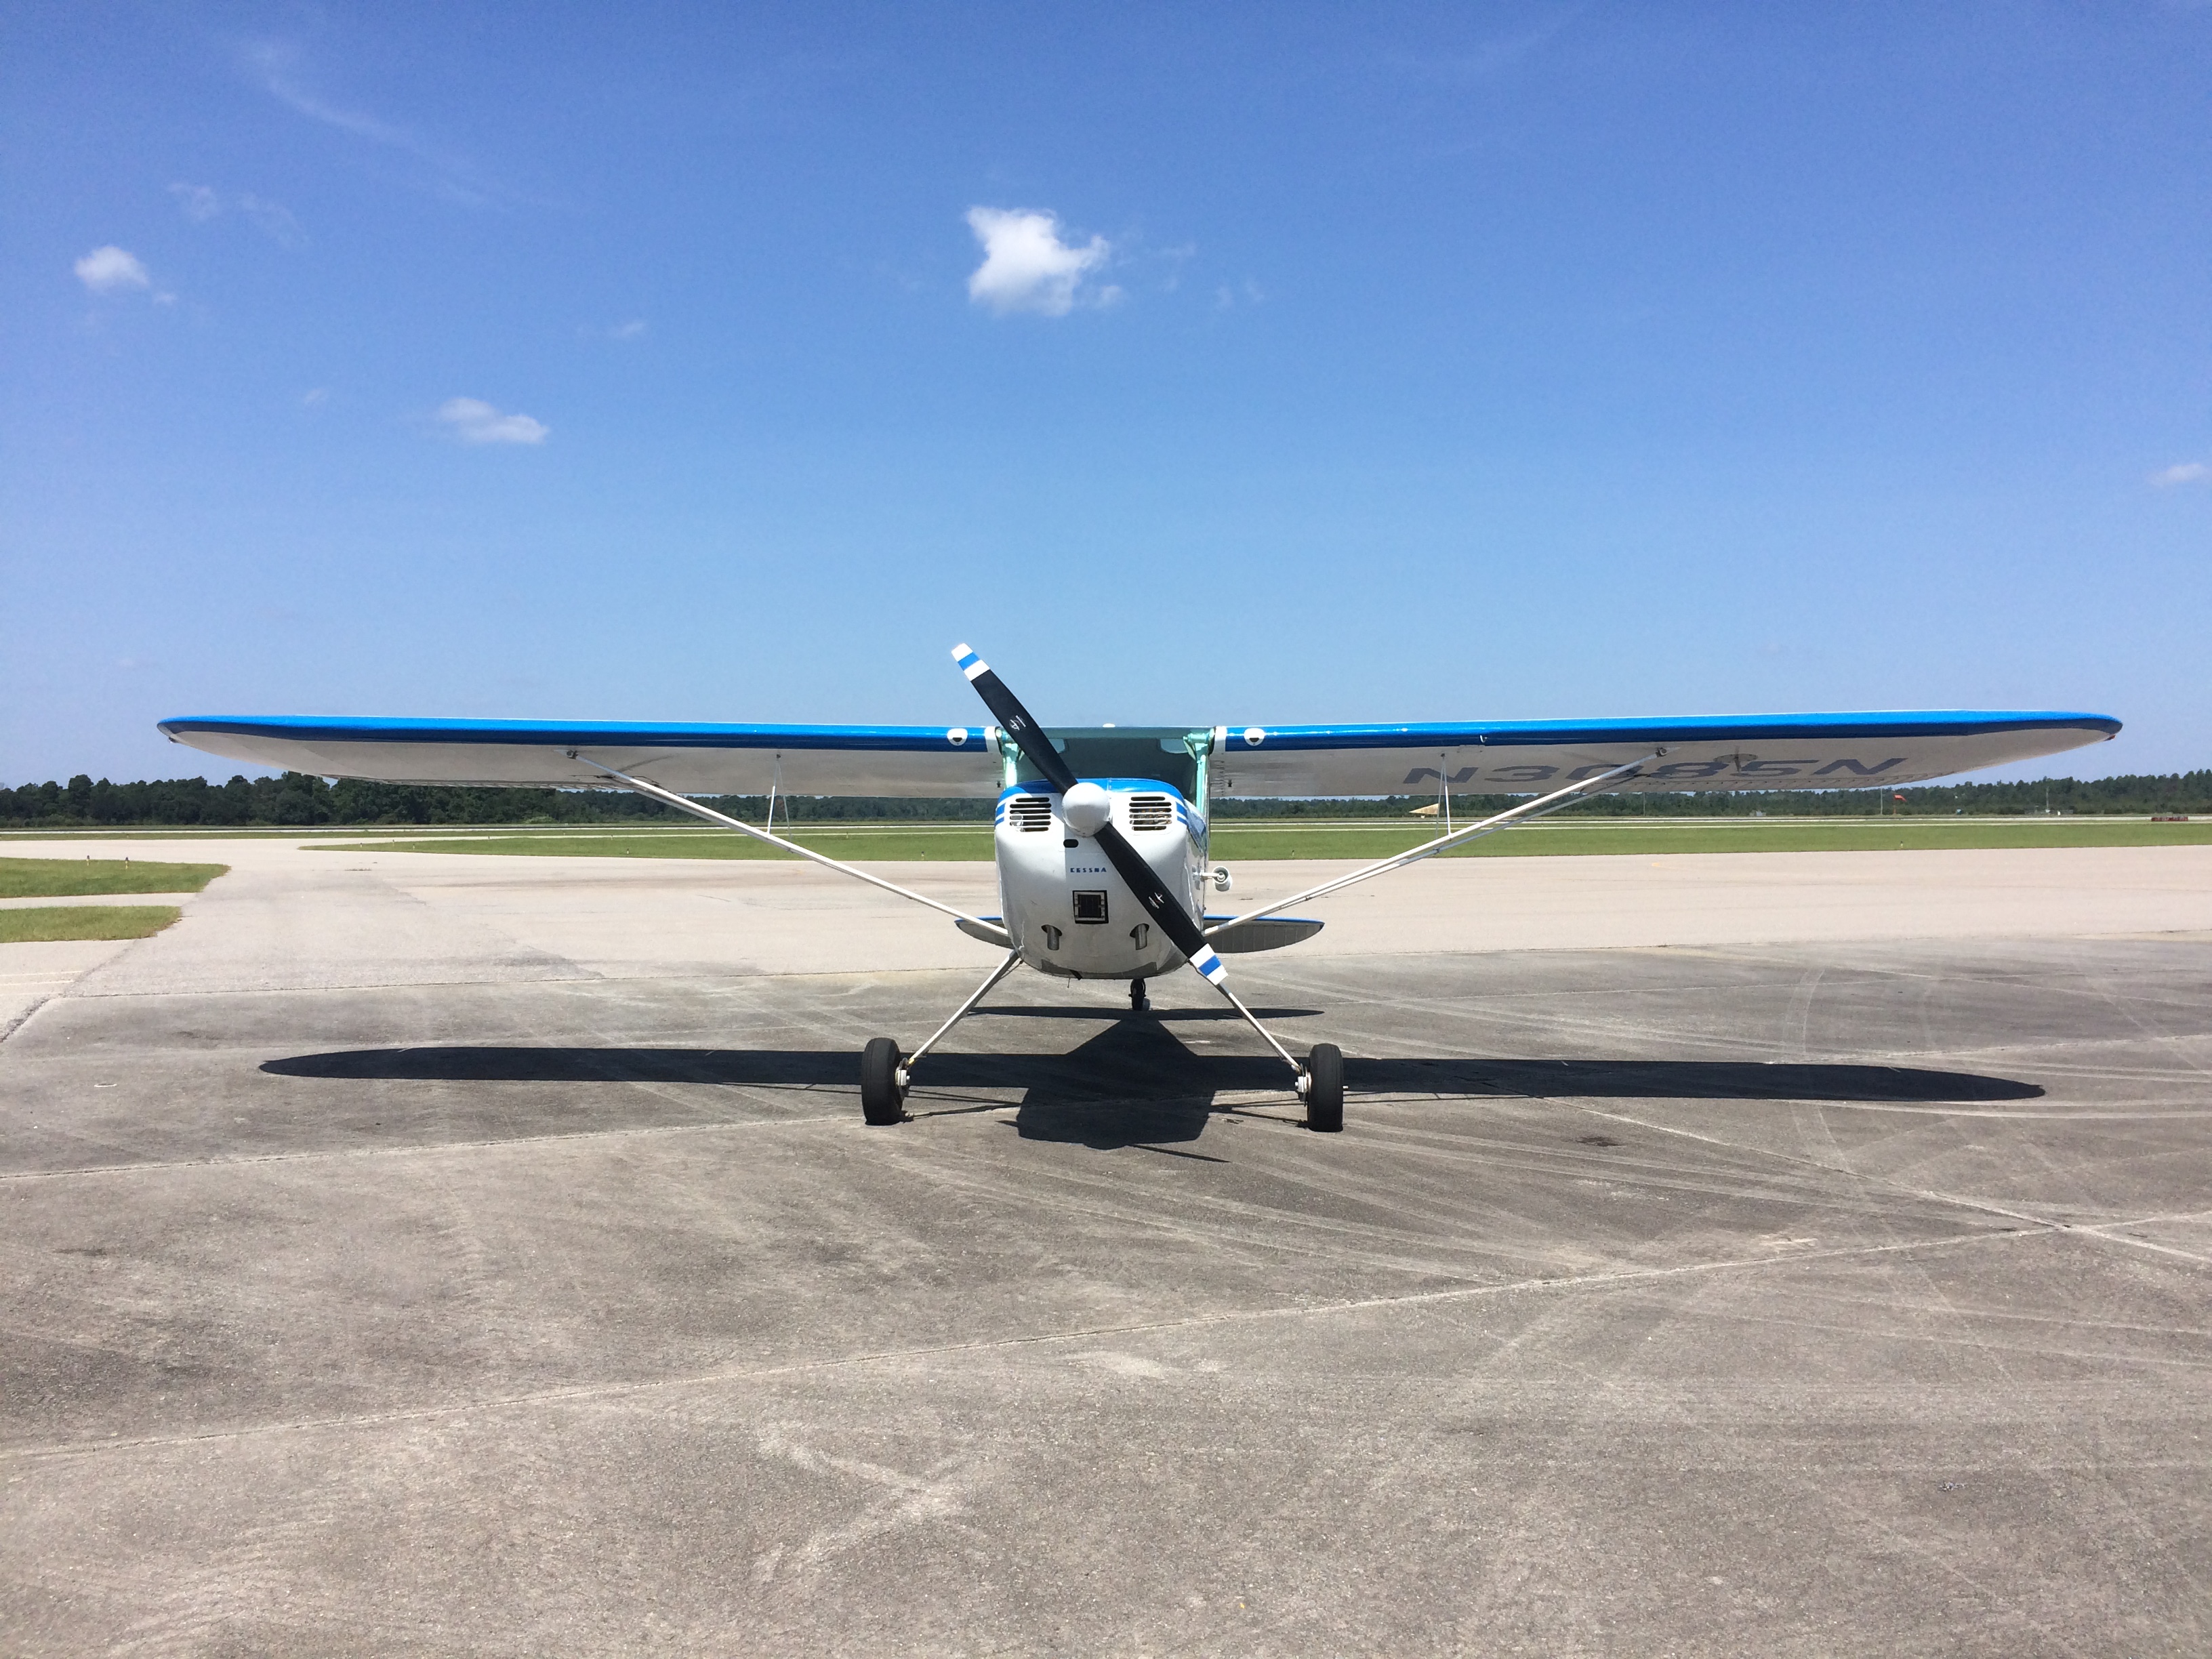 Cessna 120 Tailwheel ACE Basin Aviation